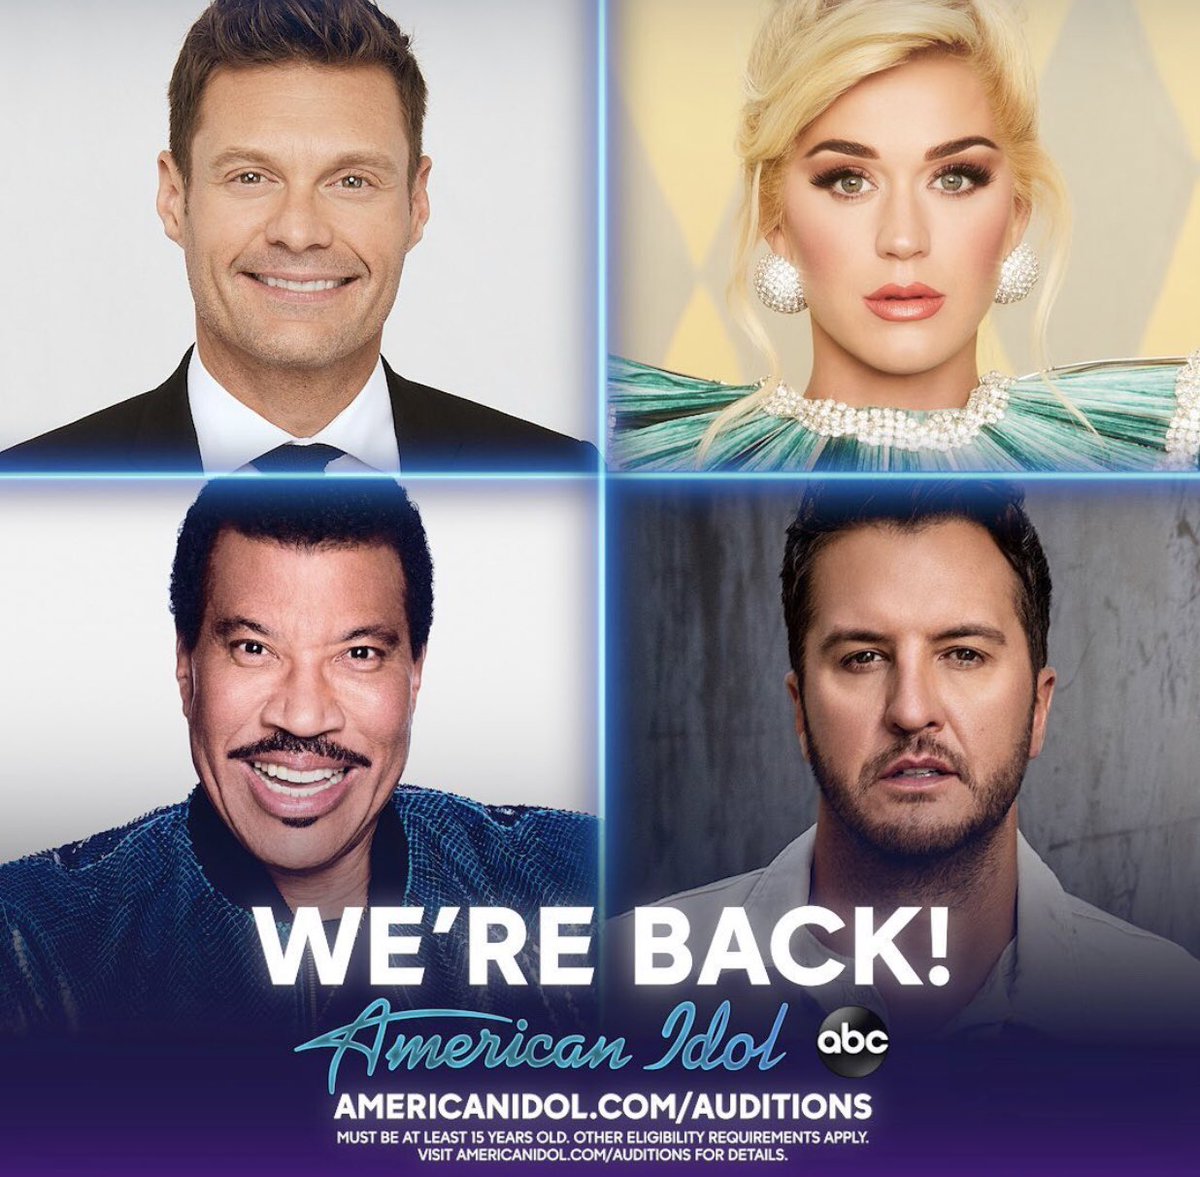 .@KatyPerry will return as a judge on ‘American Idol’ Season 4 alongside @LukeBryanOnline & @LionelRichie. 🎤